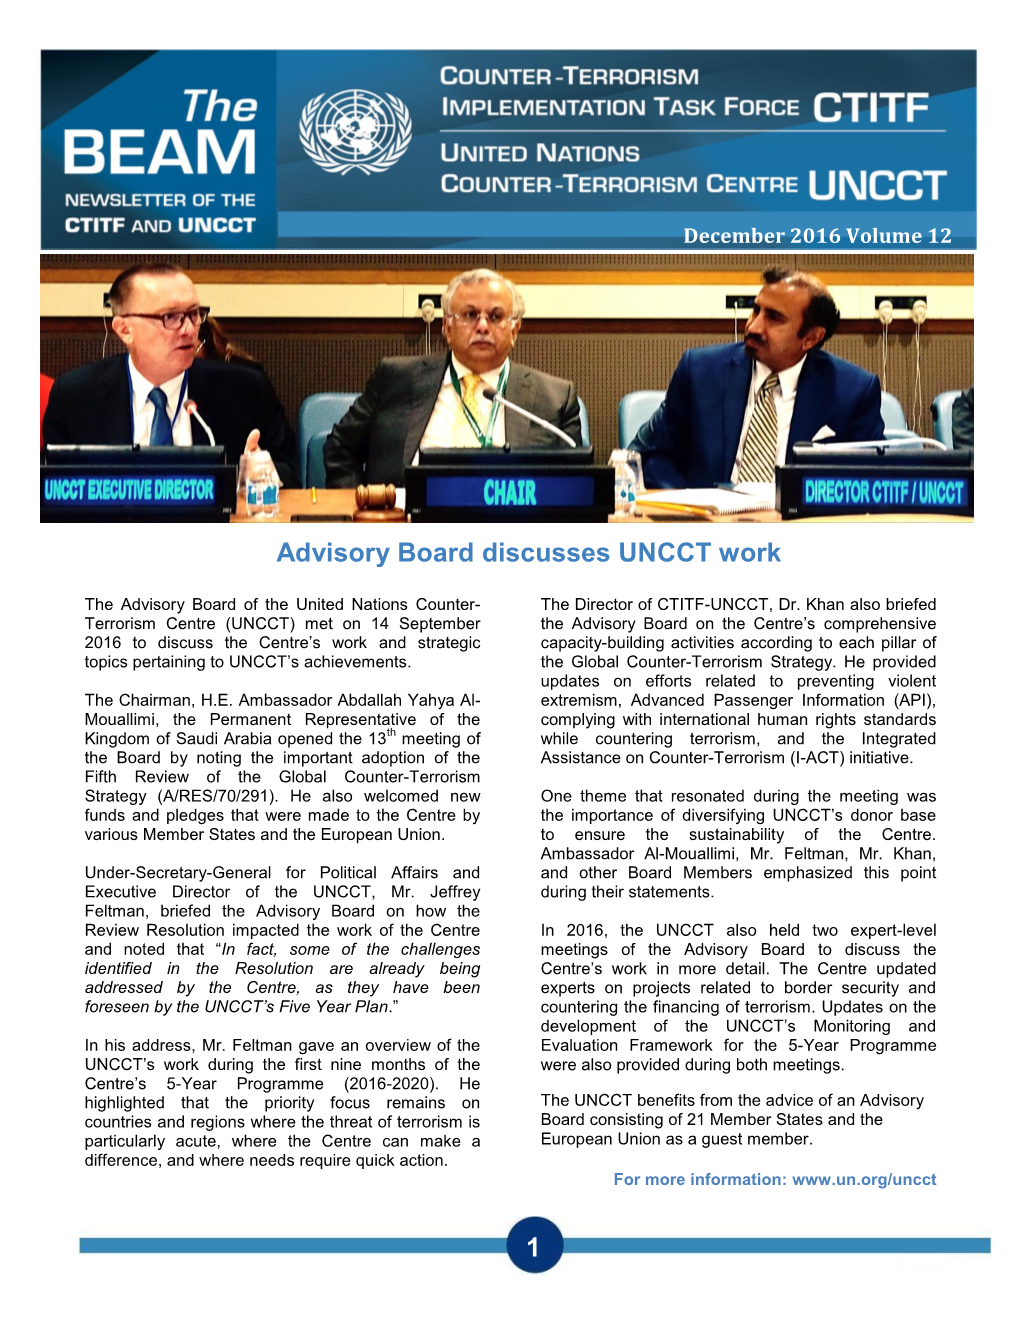 1 Advisory Board Discusses UNCCT Work